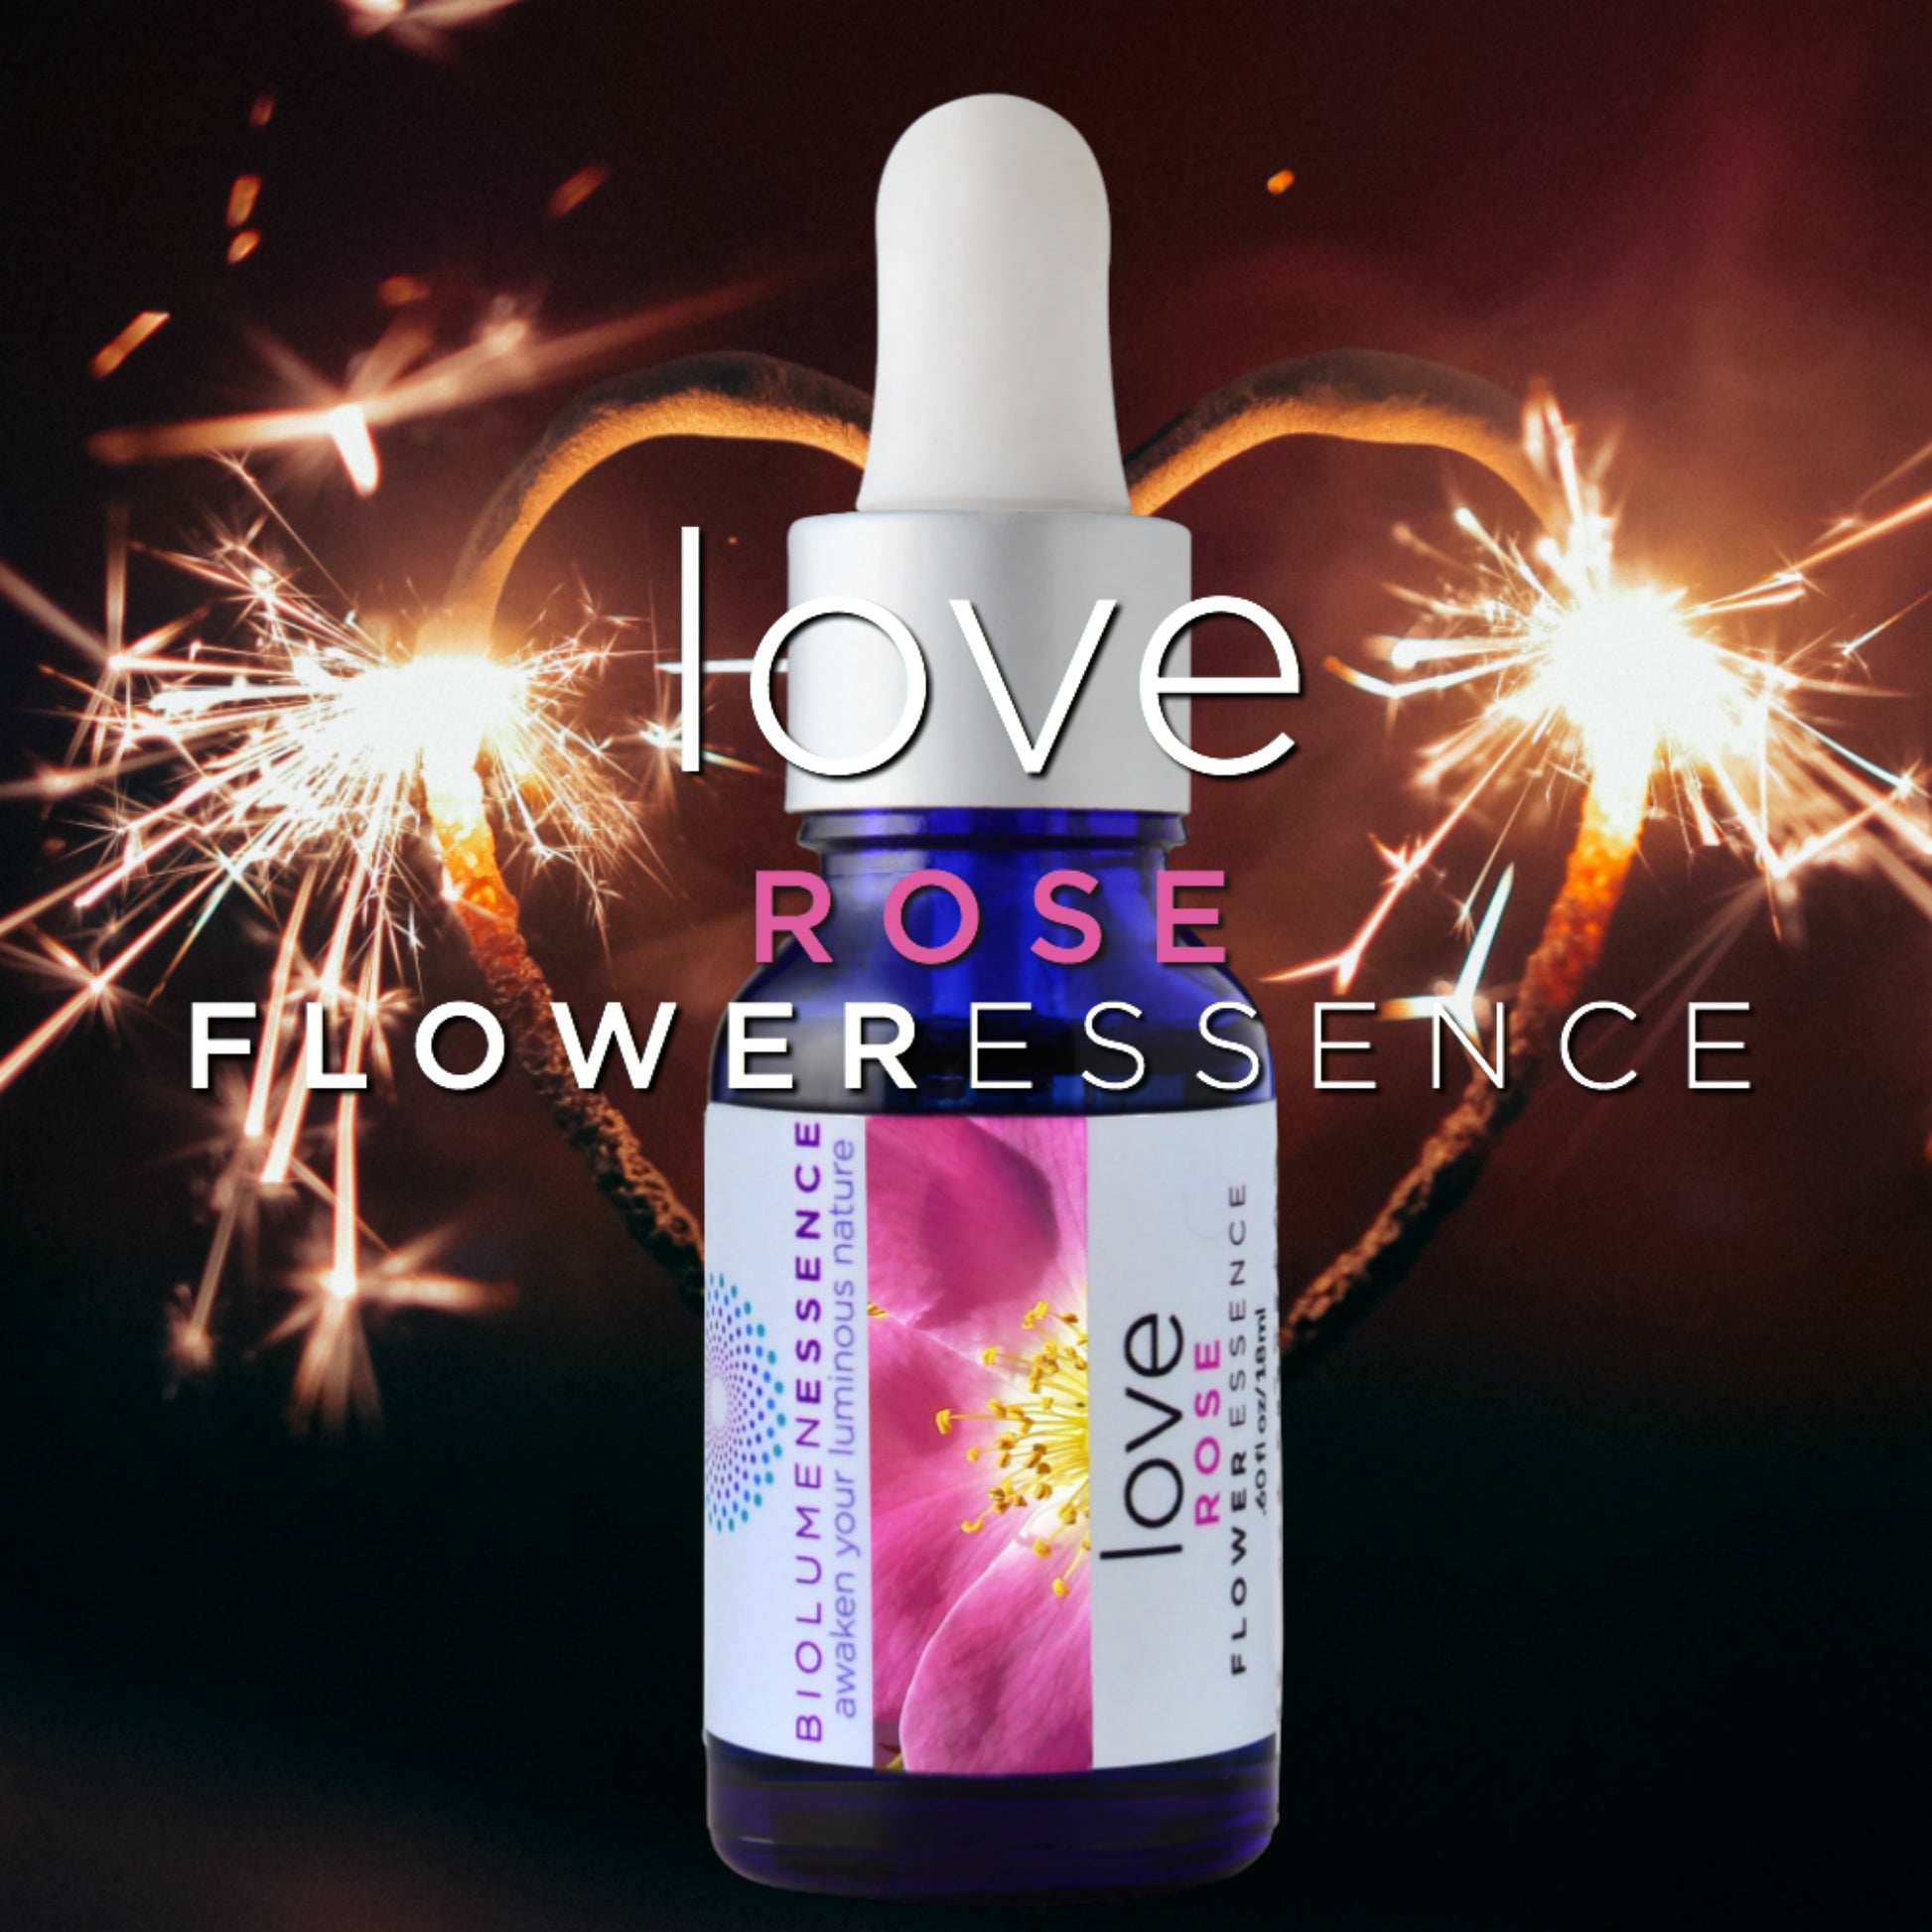 Love Rose Flower Essence